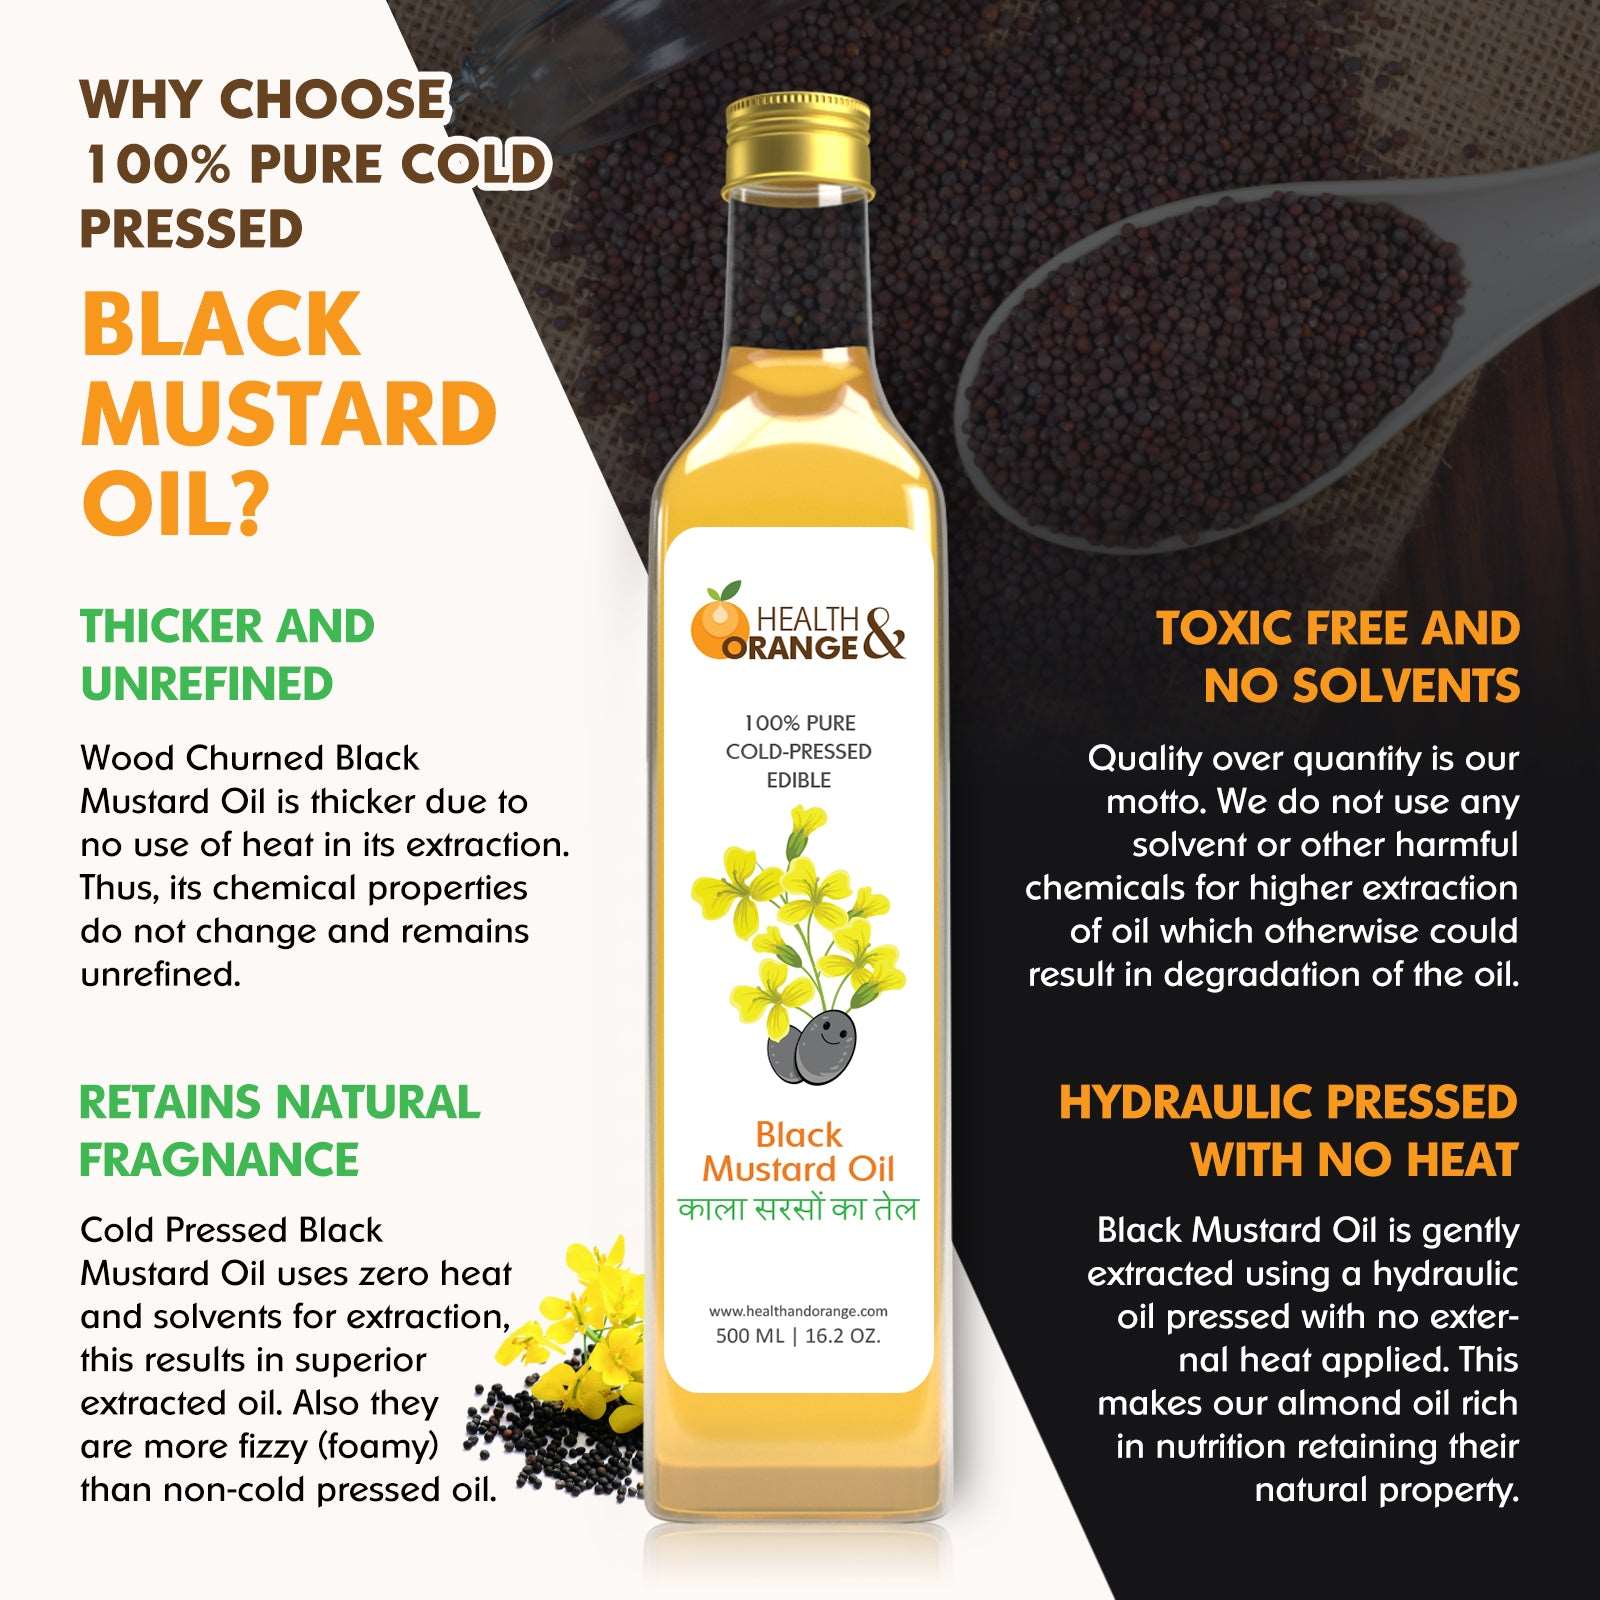 Black Mustard Oil – Health and Orange